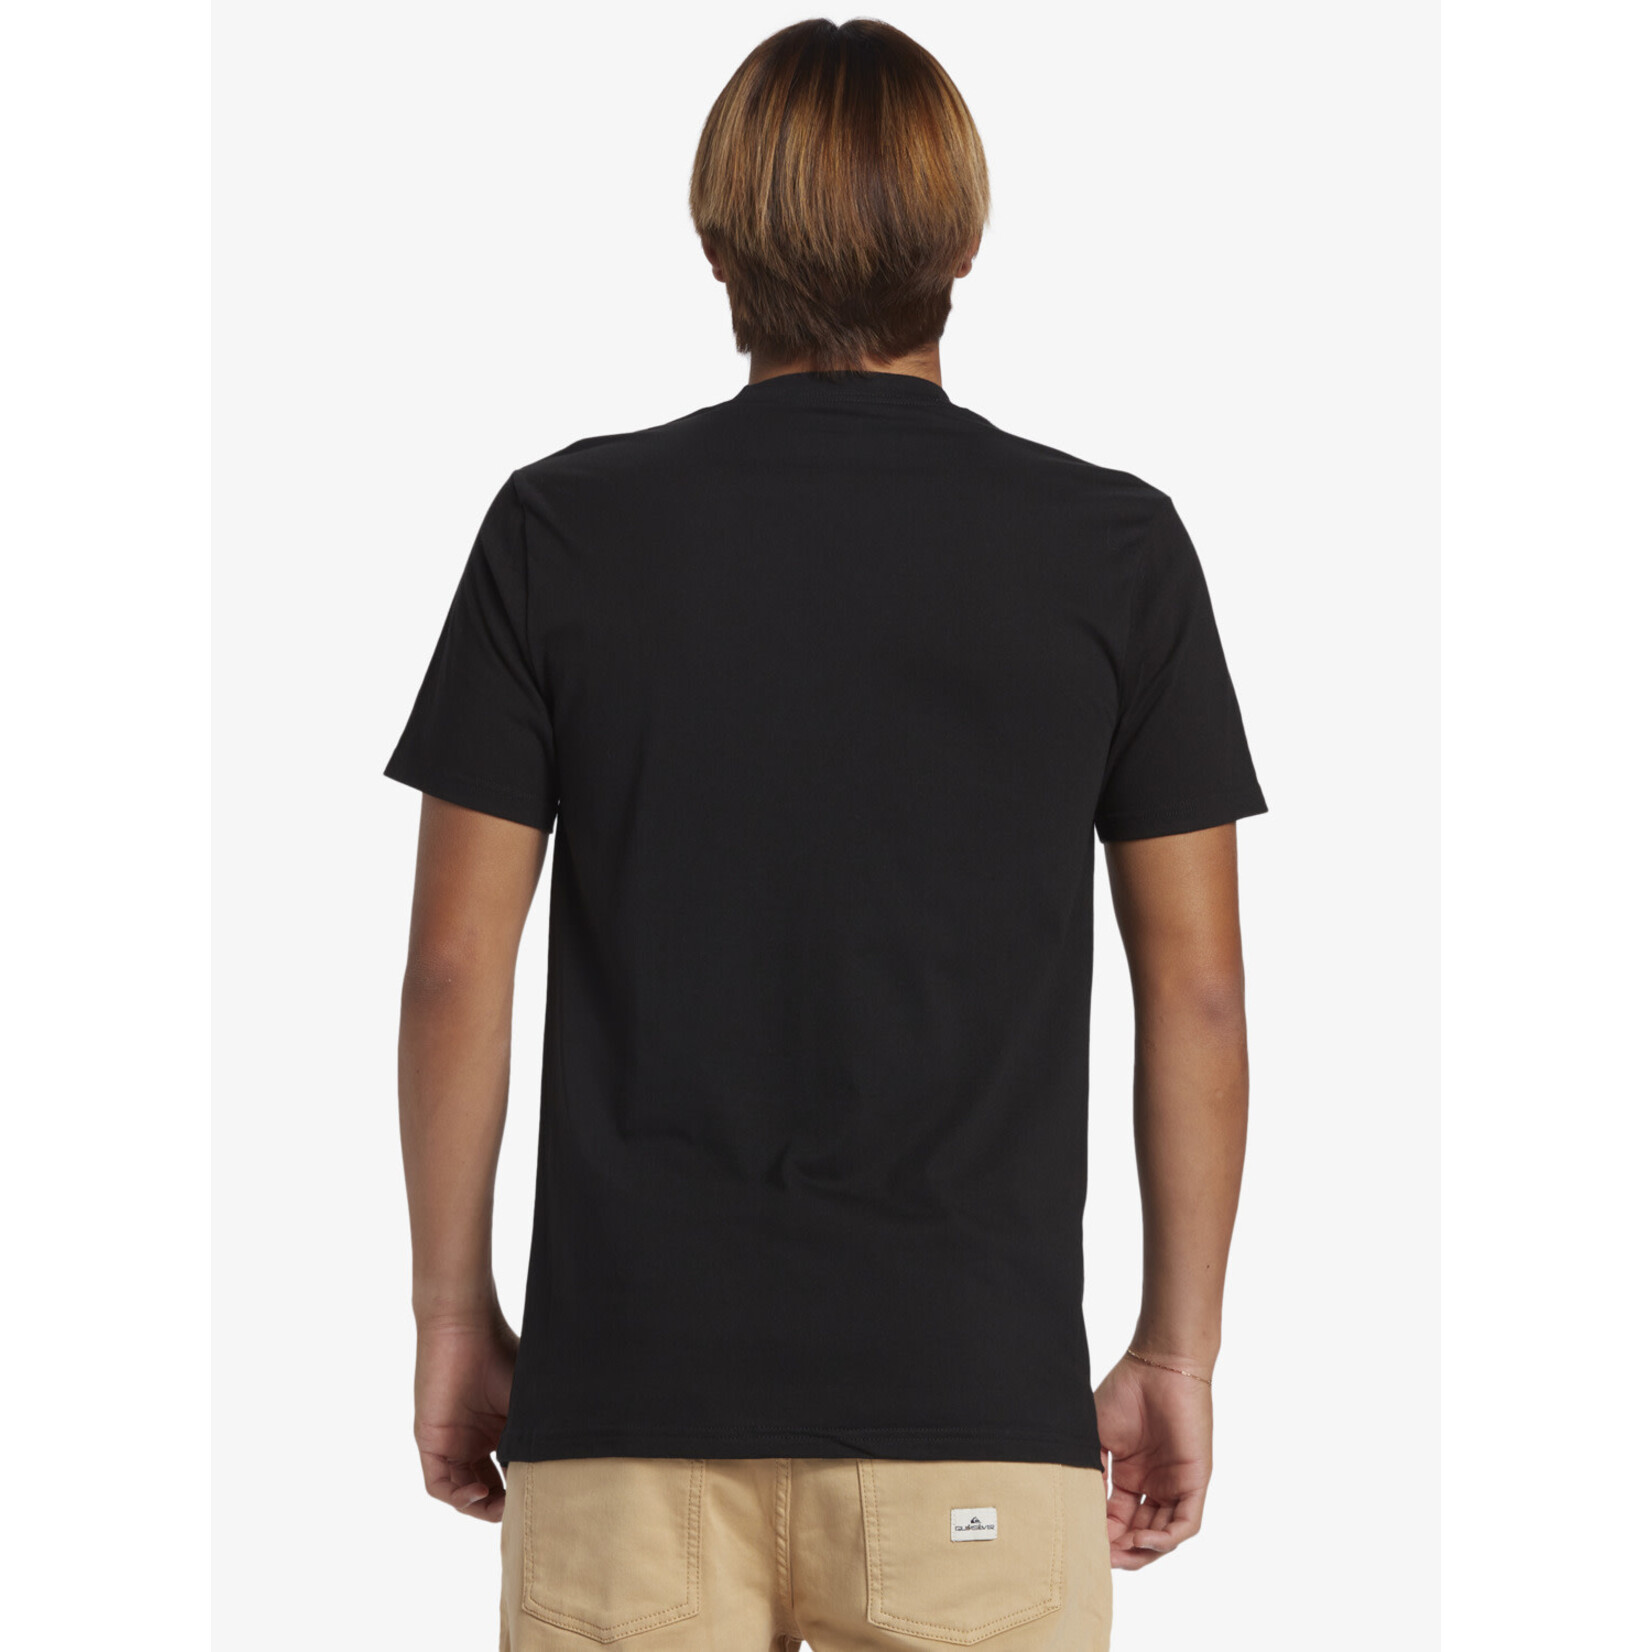 Quiksilver Gradient Lines T-Shirt